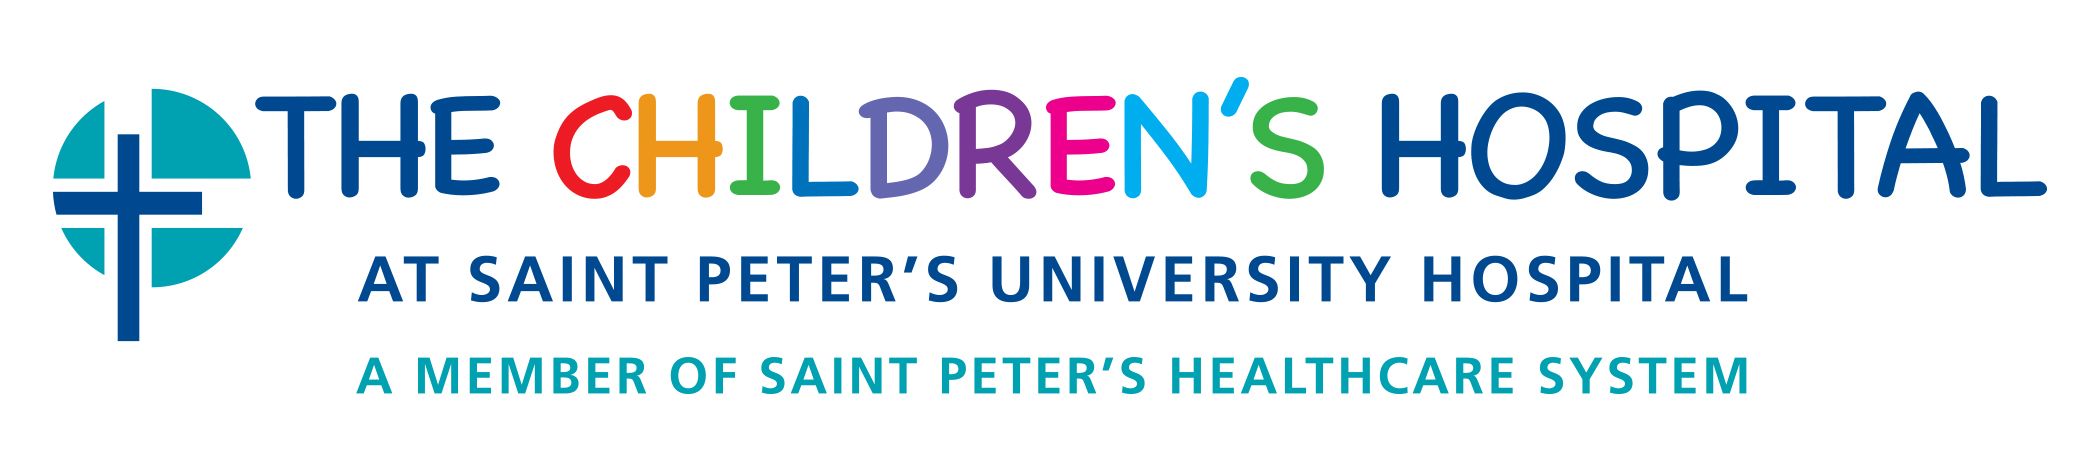 The Children's Hospital at Saint Peter's University Hospital